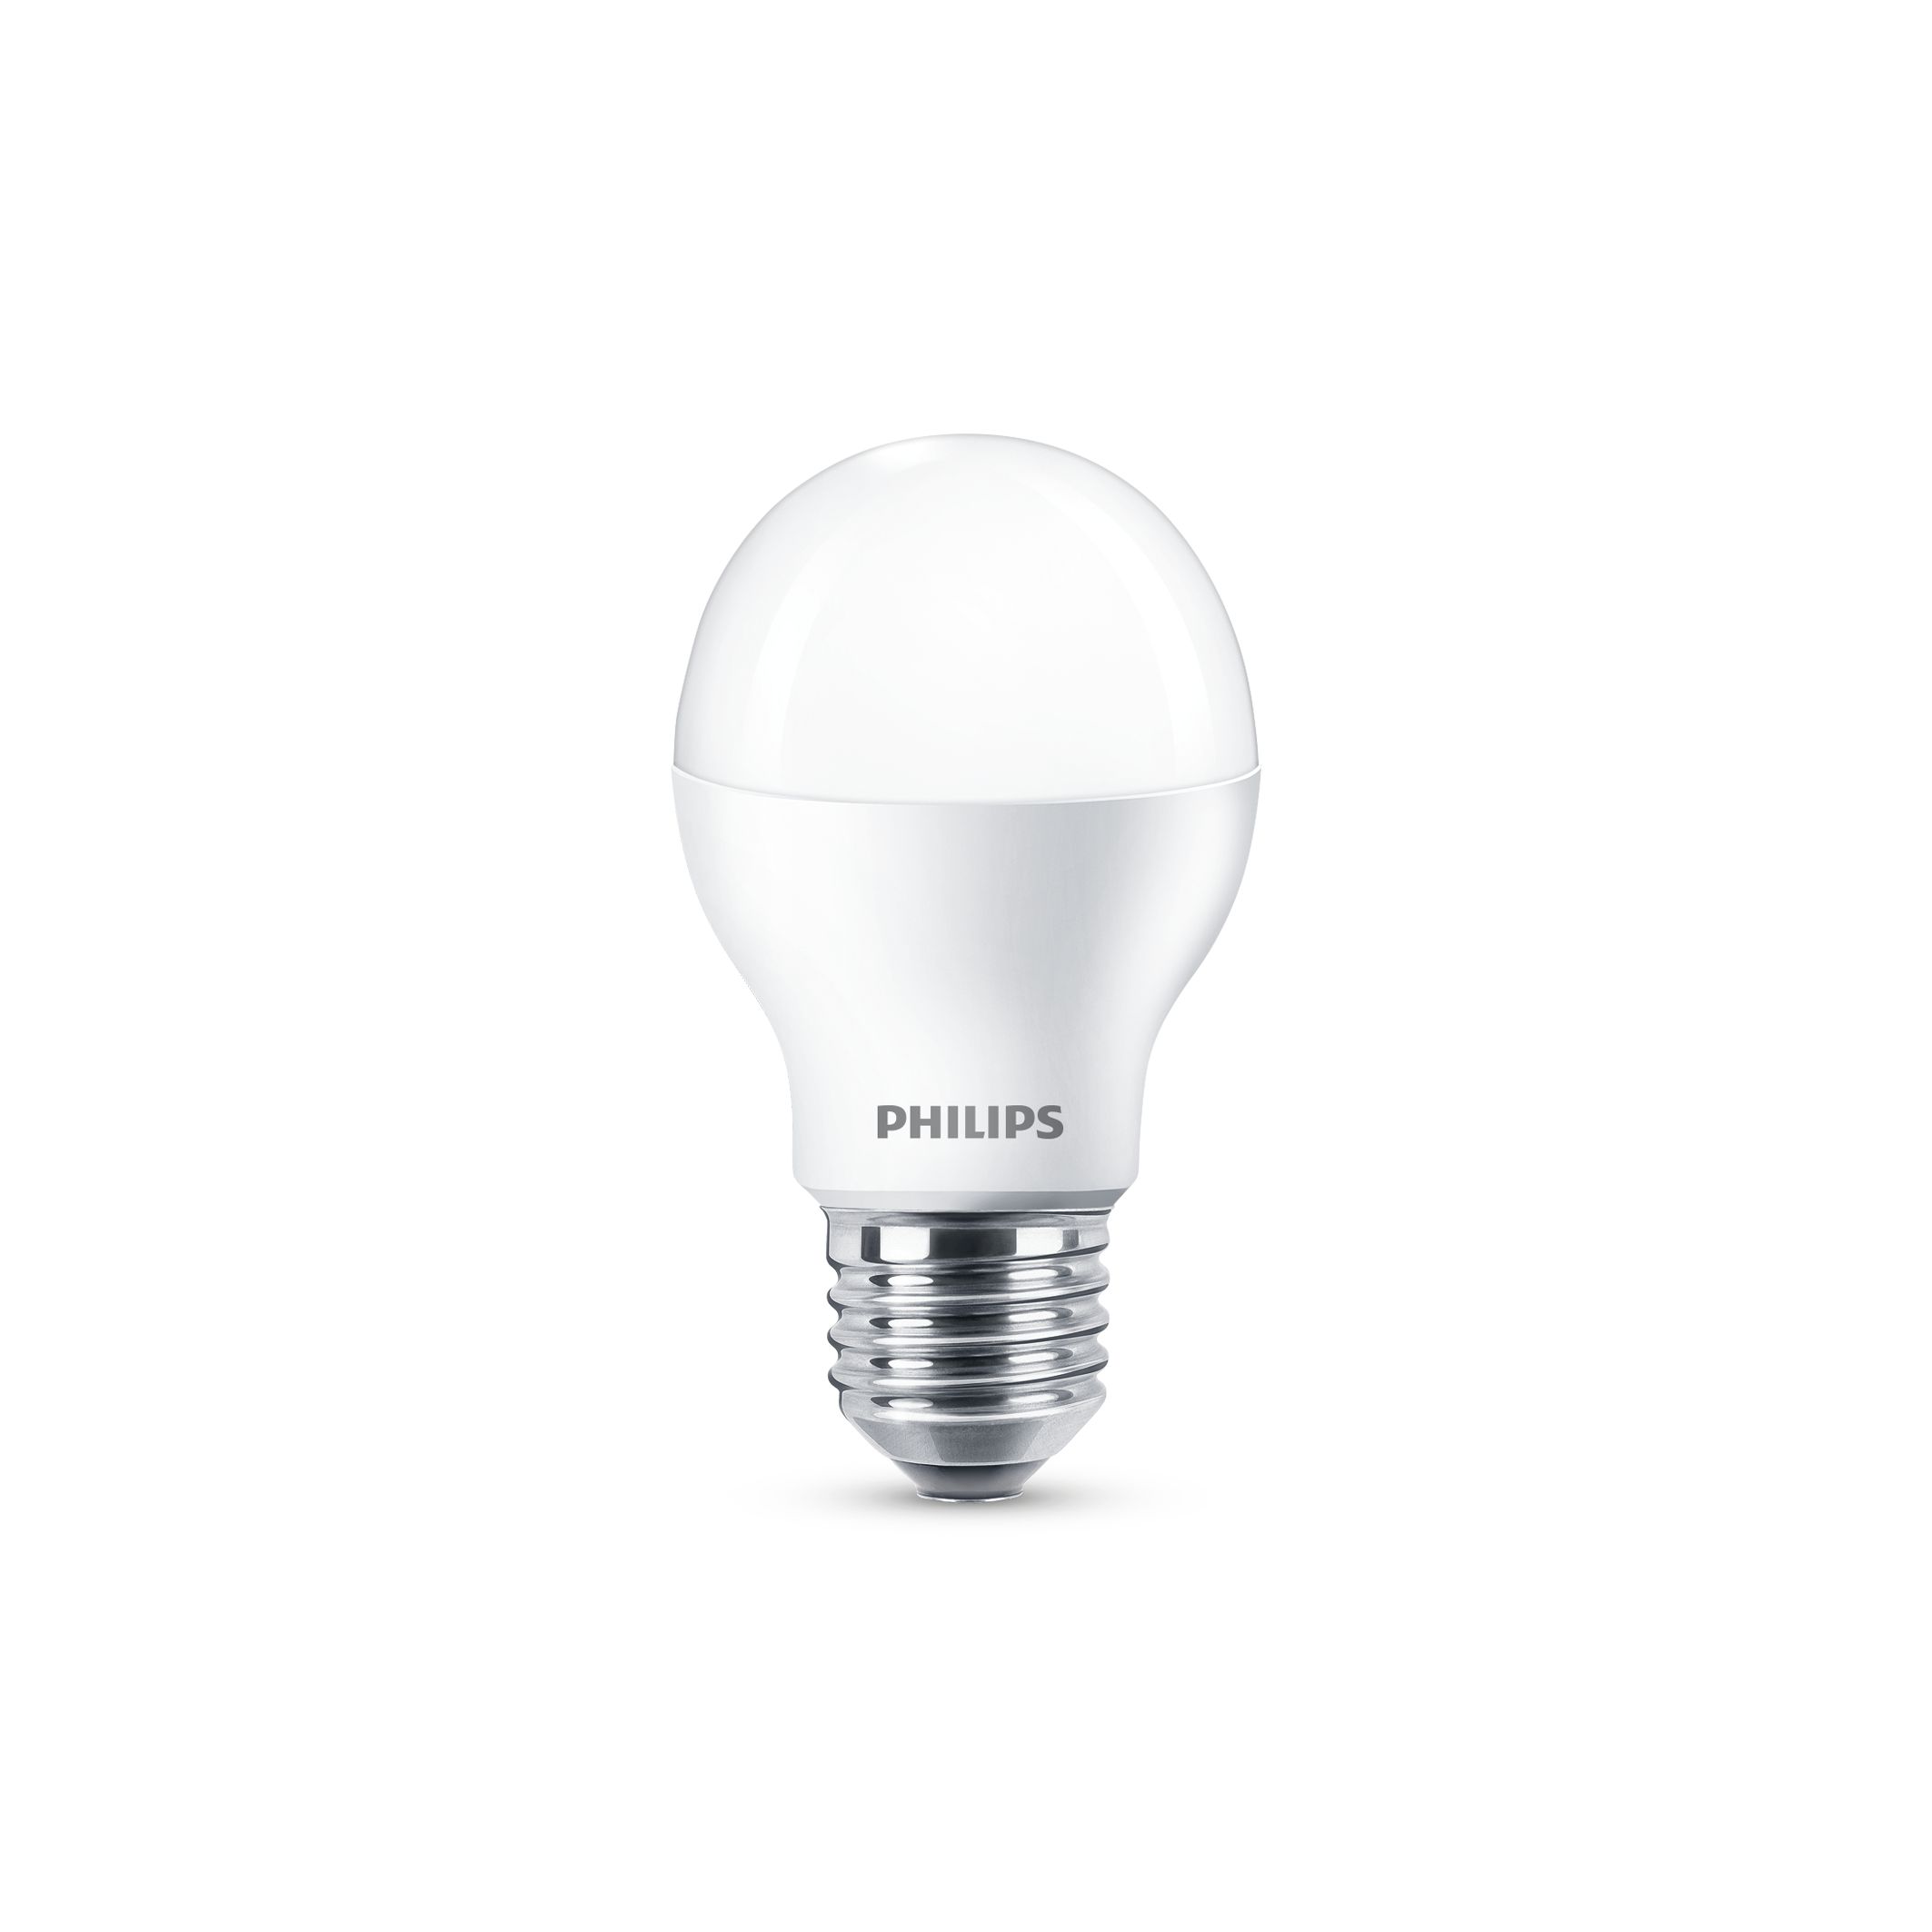 Acquiesce hart stad Essential LED bulbs | 6979537 | Philips lighting